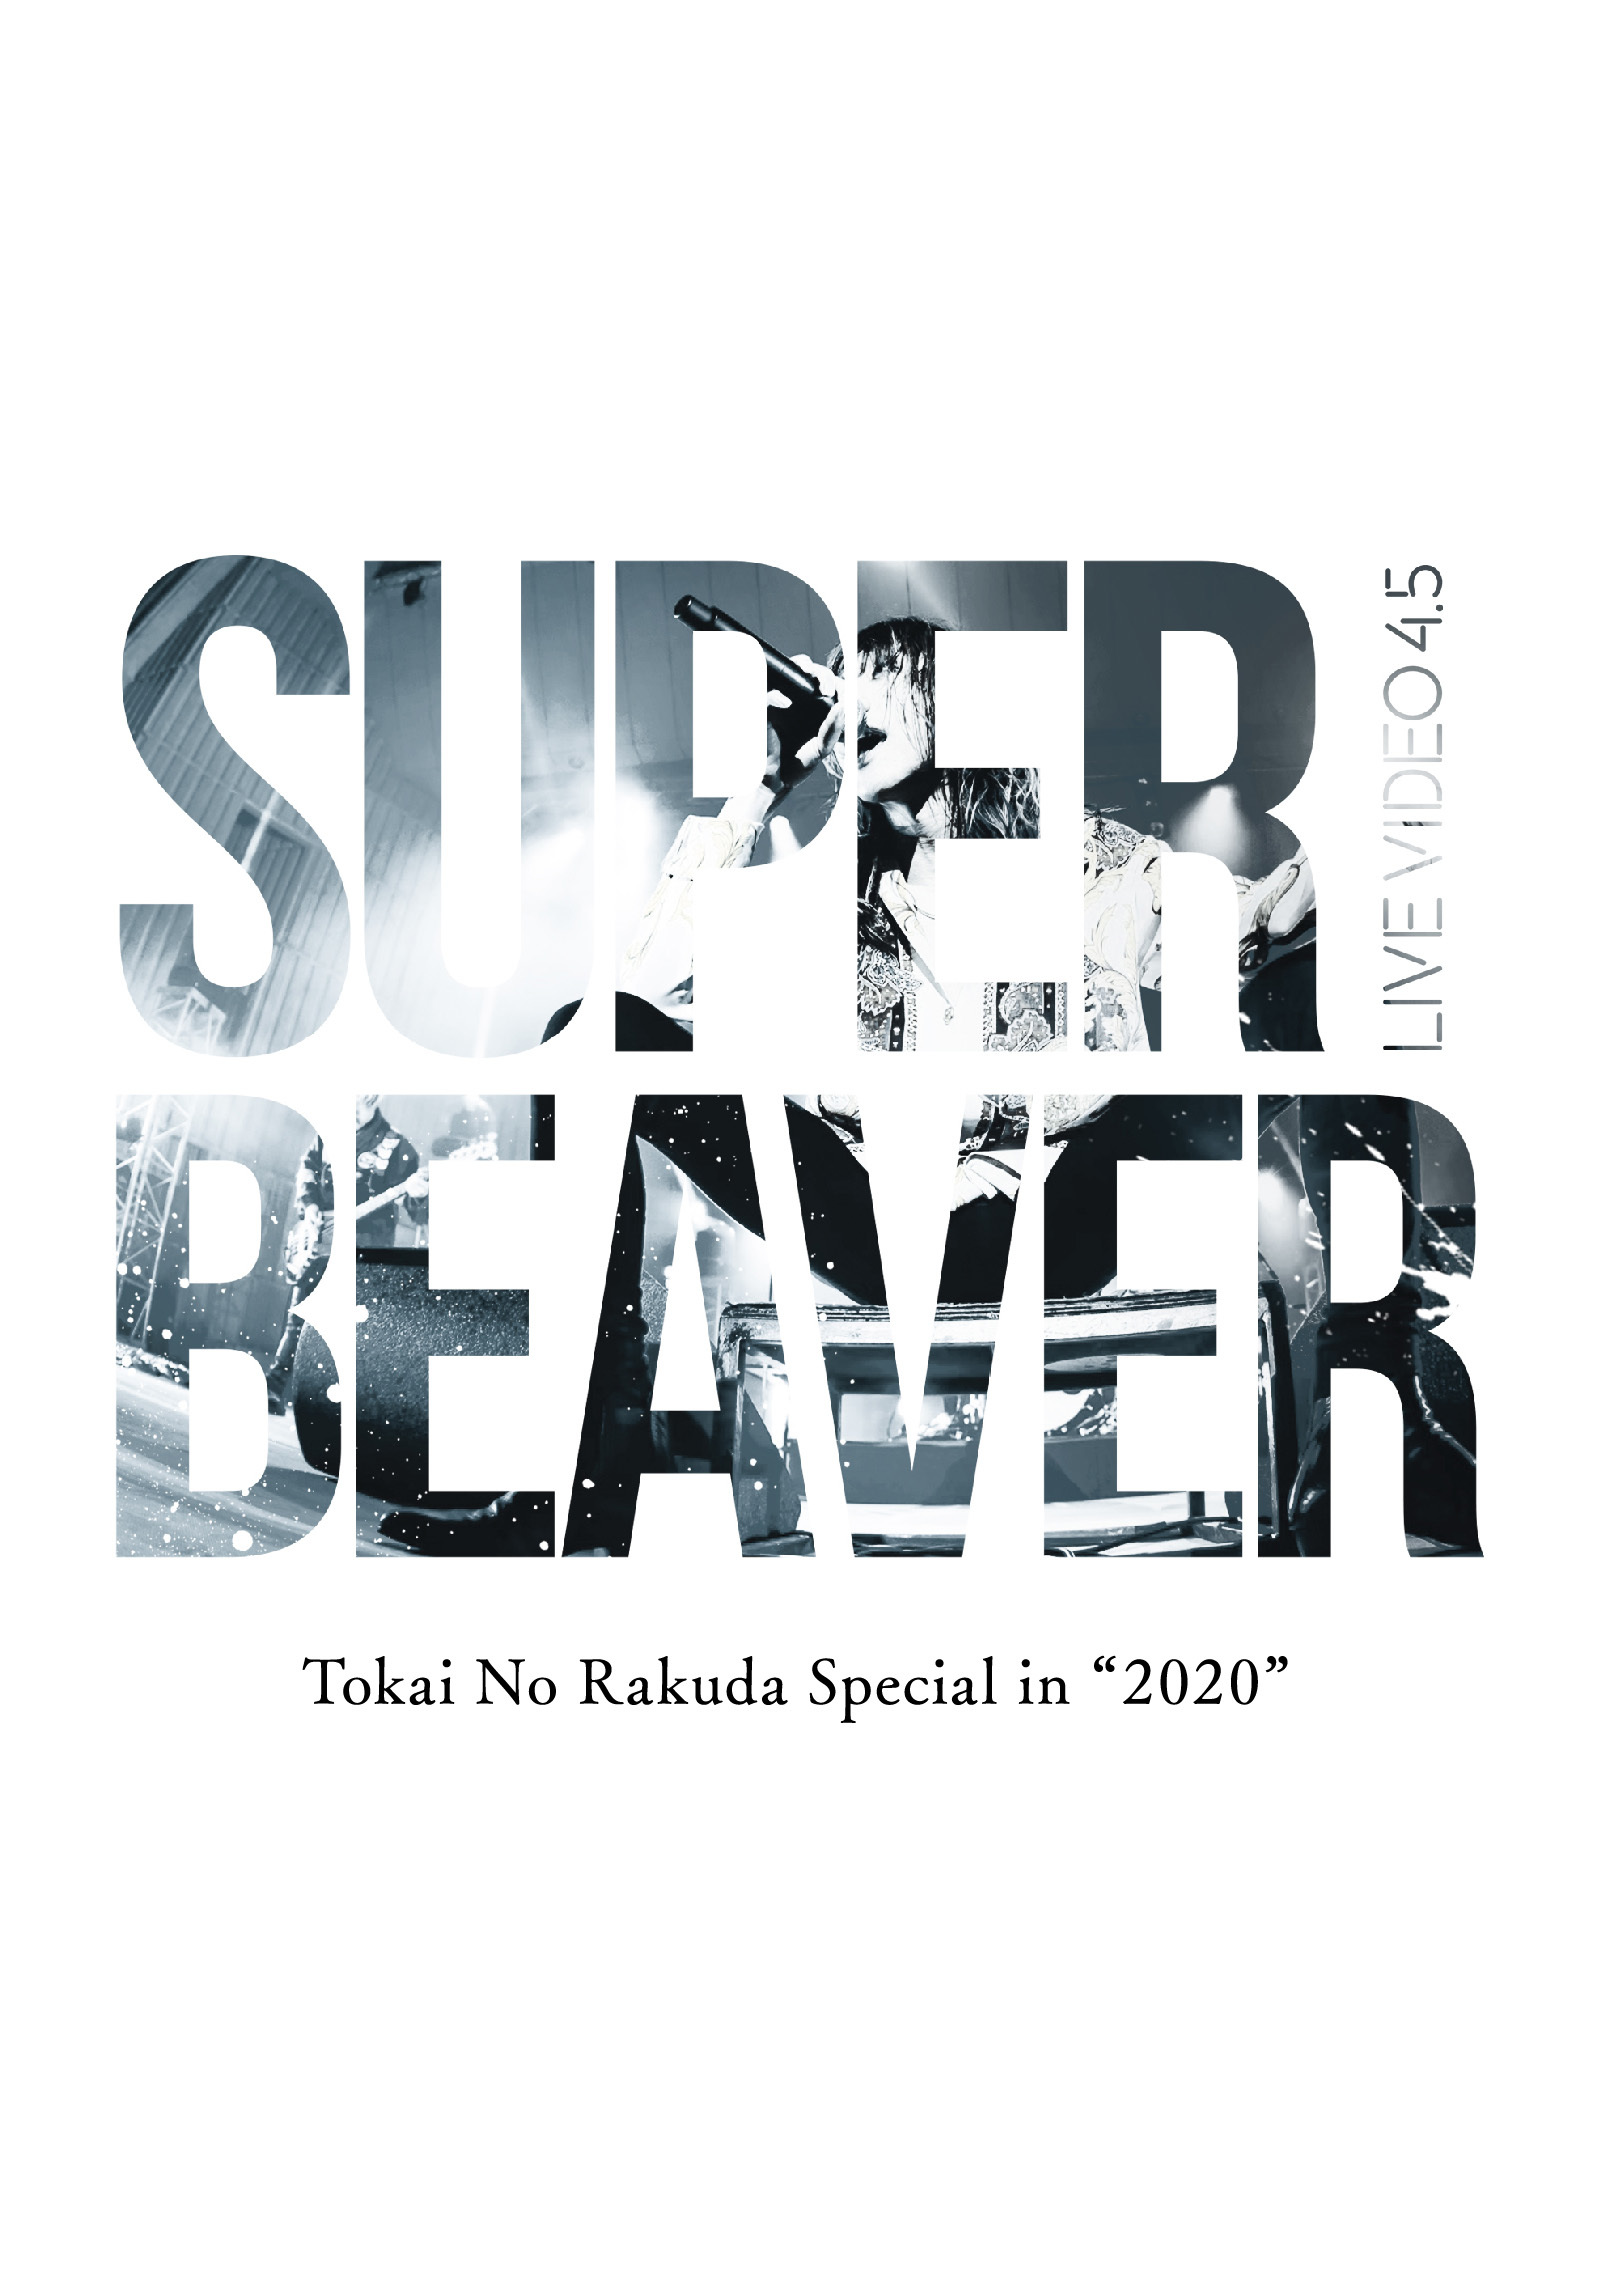 『LIVE VIDEO 4.5 Tokai No Rakuda Special in "2020"』DVDジャケット